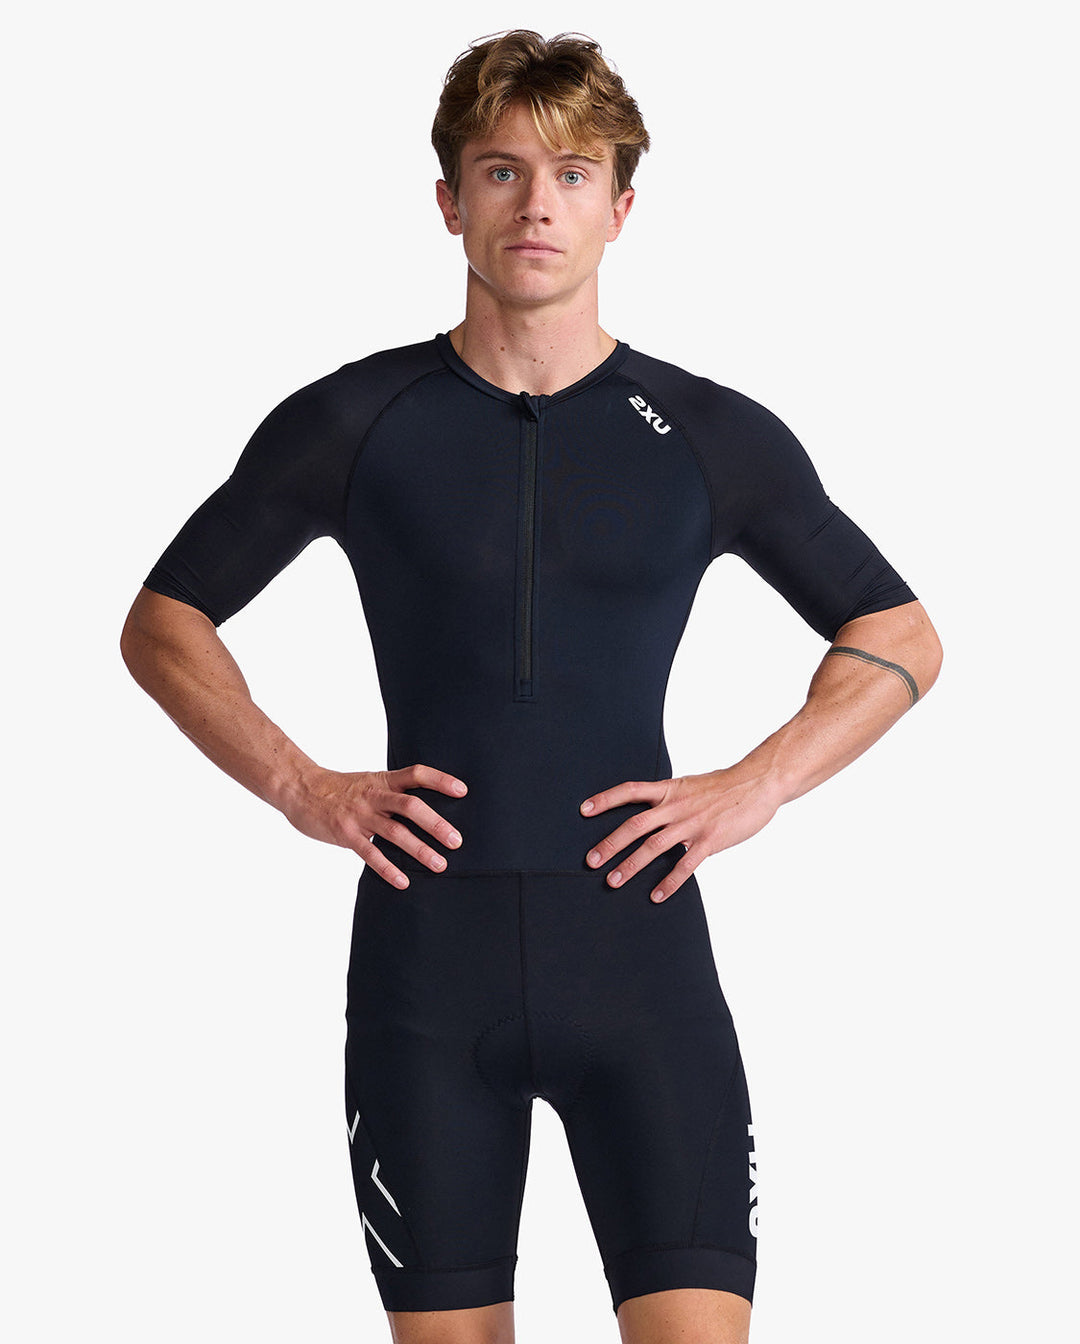 2XU Core Sleeved Men's Cycling Trisuit (Black/White)